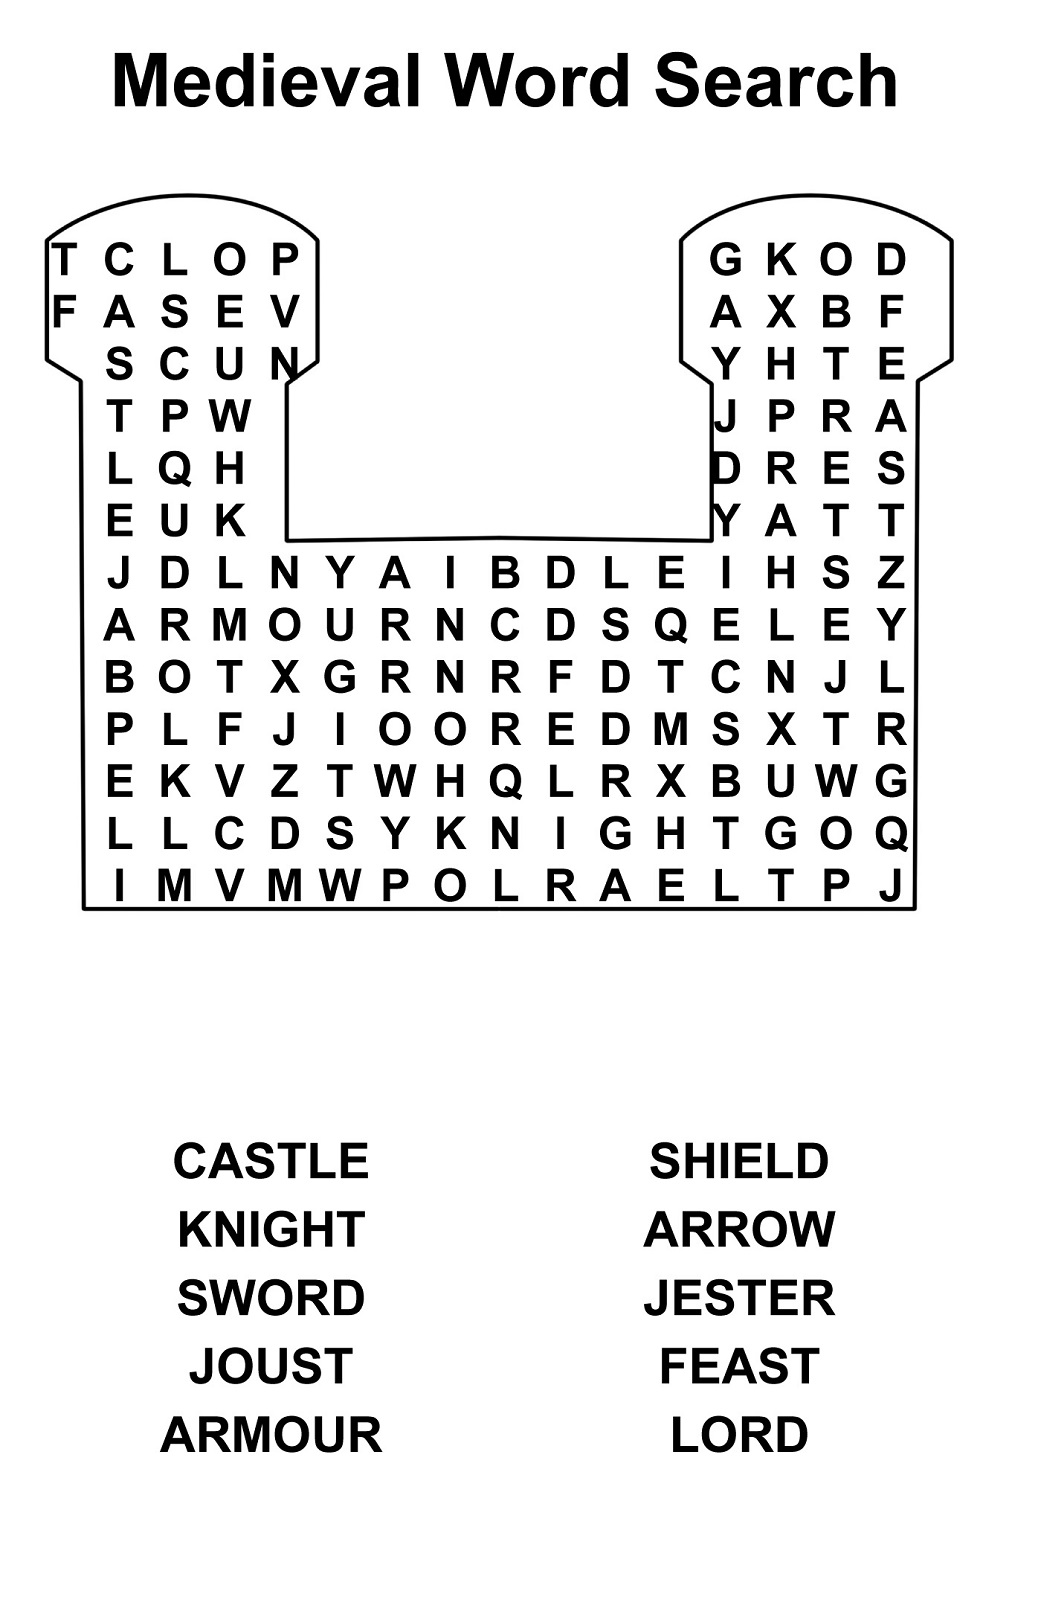 confers knighthood on crossword